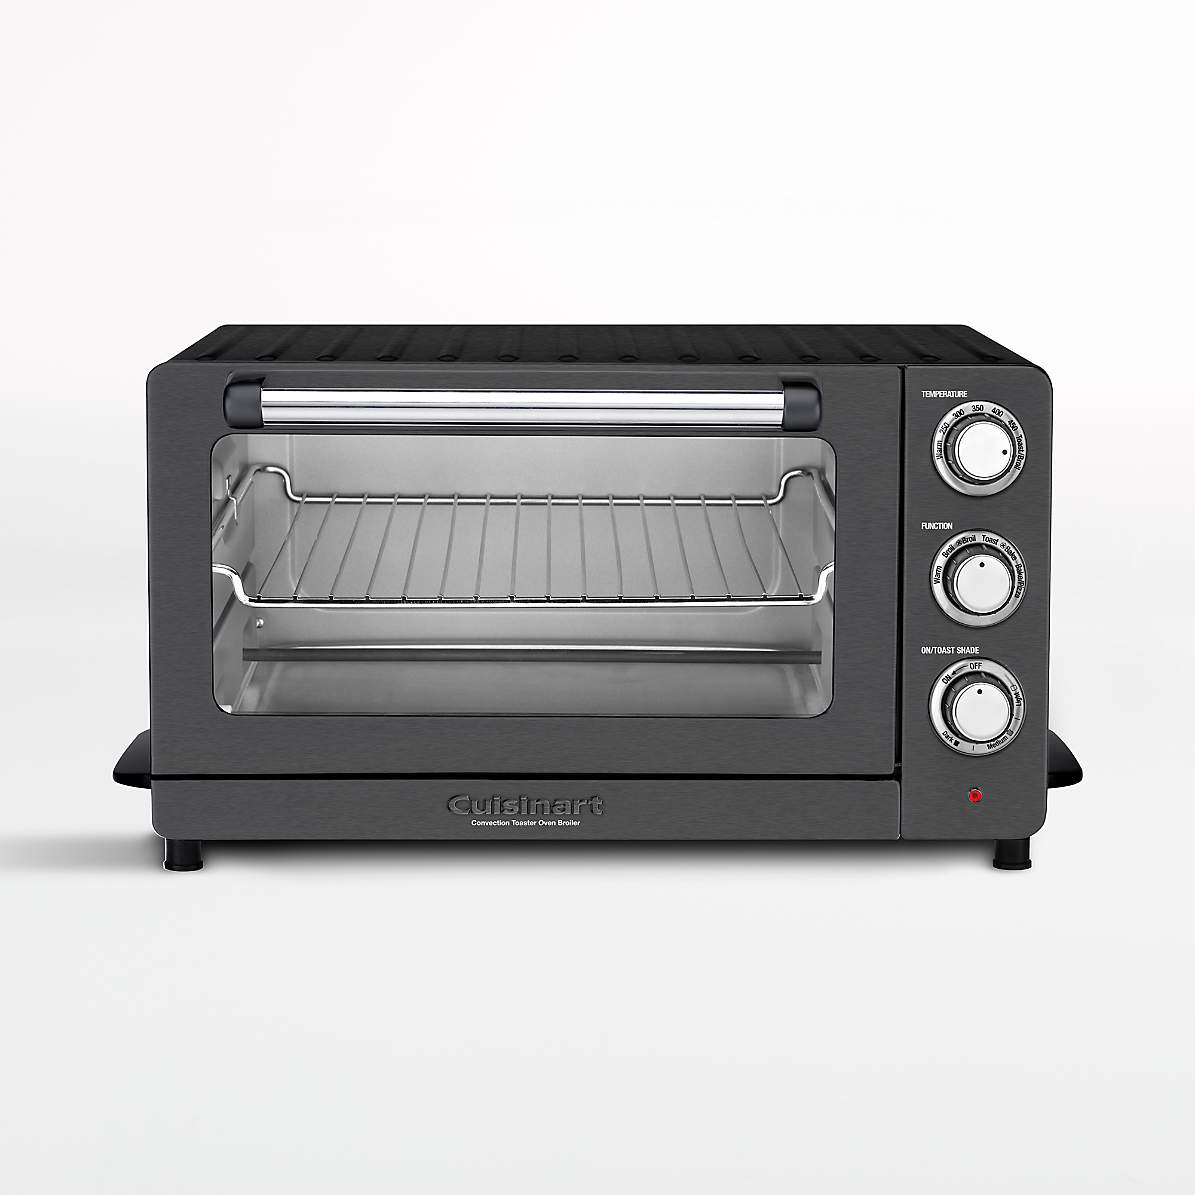 Cuisinart Black Toaster Hotsell, 57% OFF | www.ingeniovirtual.com